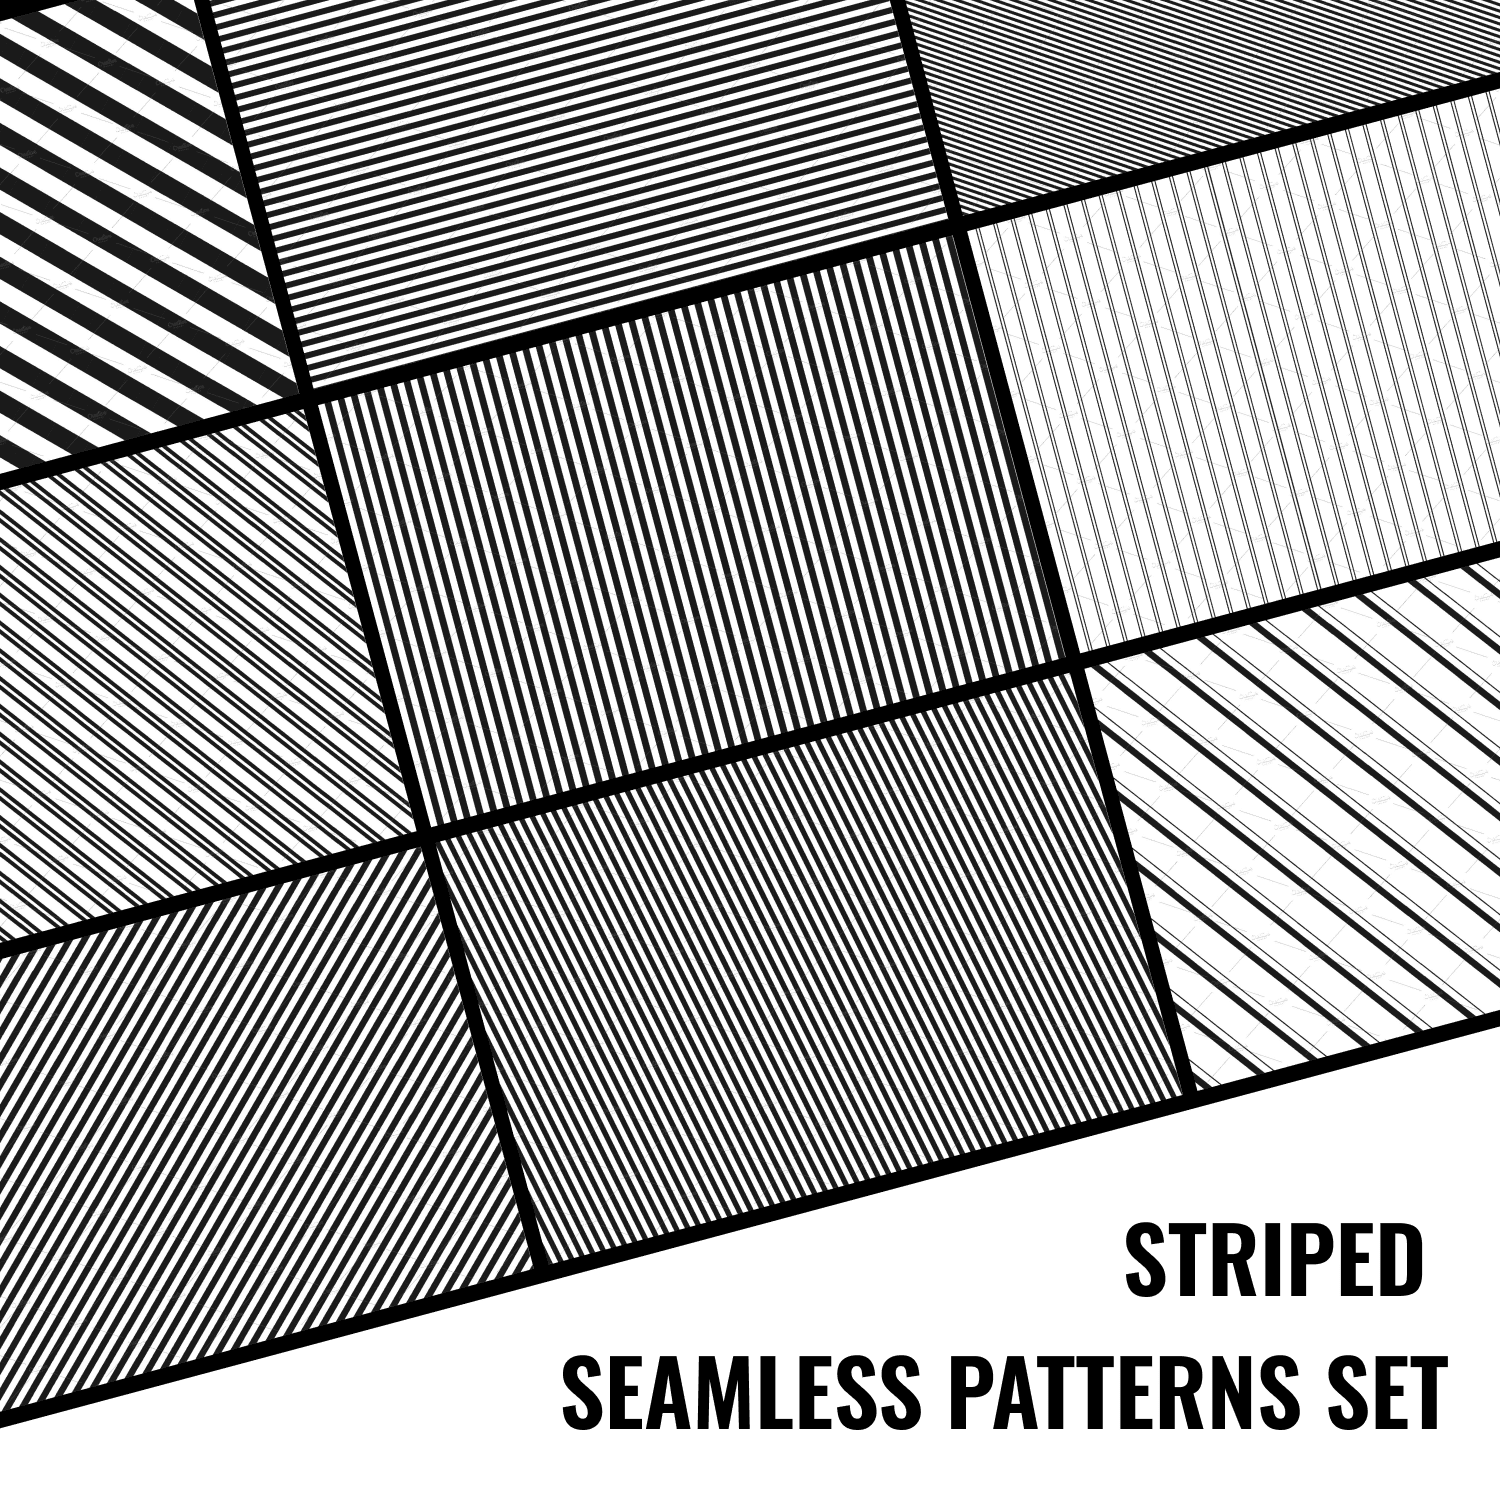 Striped seamless patterns set.